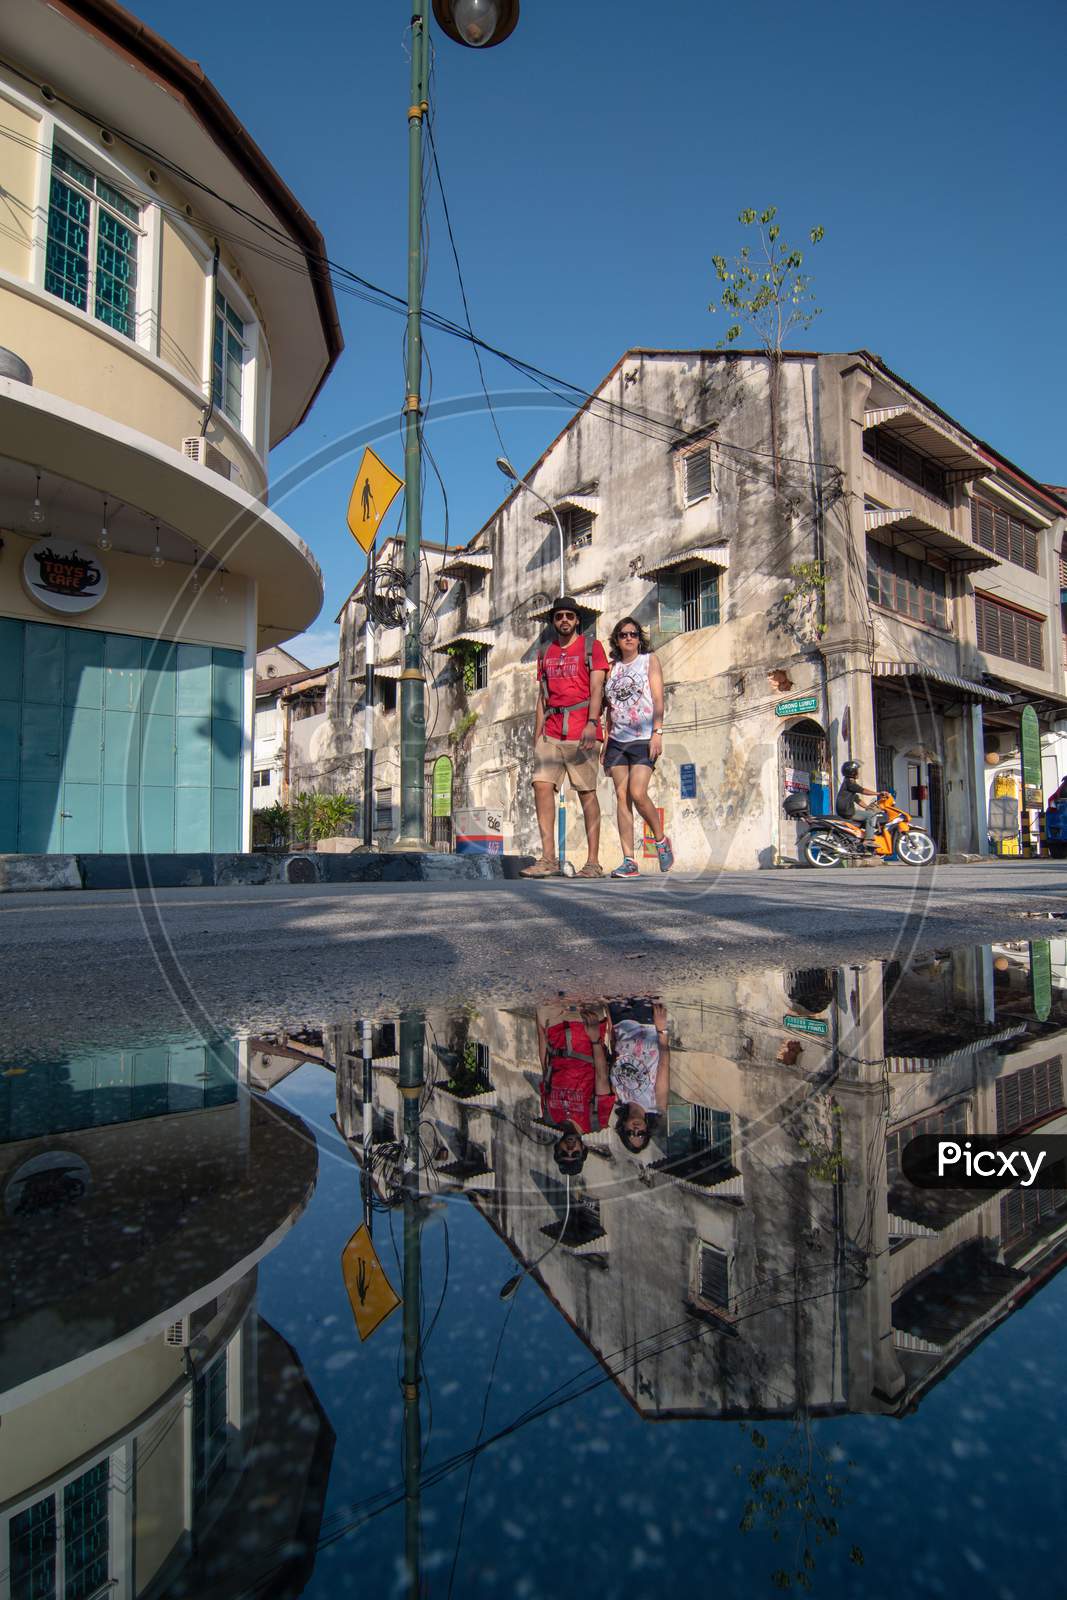 Reflection Tourist Walk At Street In Penang